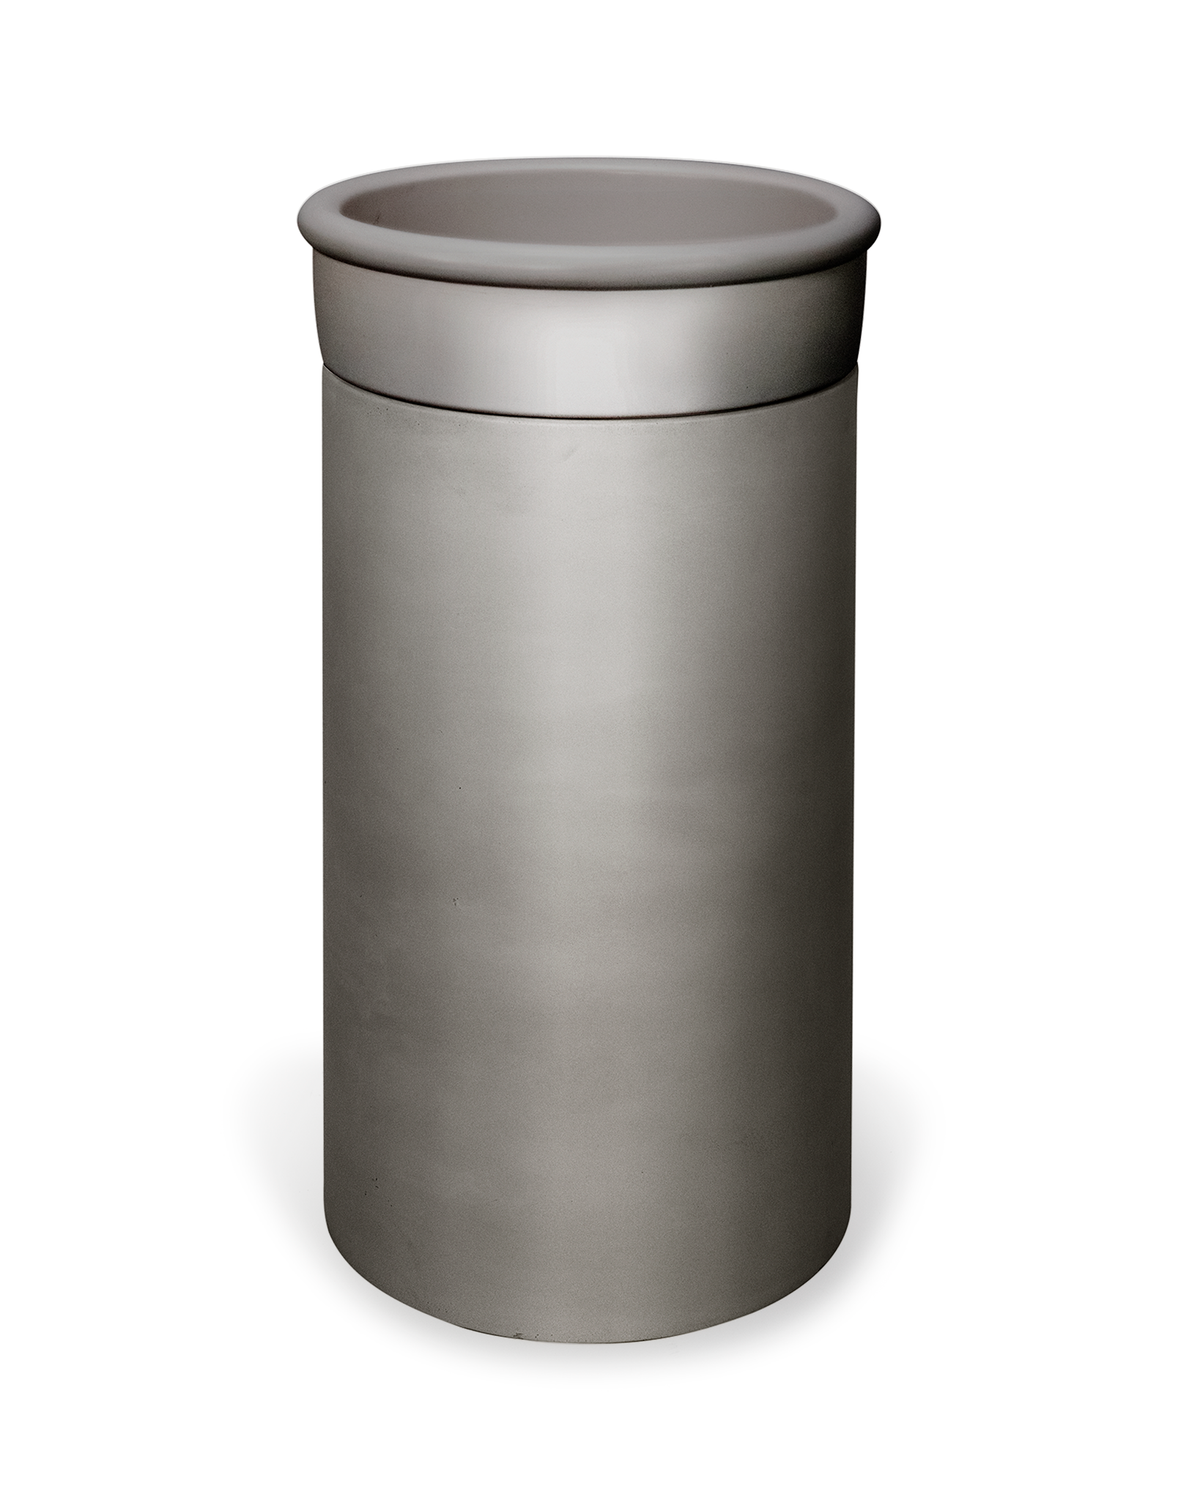 Cylinder - Tubb Basin (Mid Tone Grey)